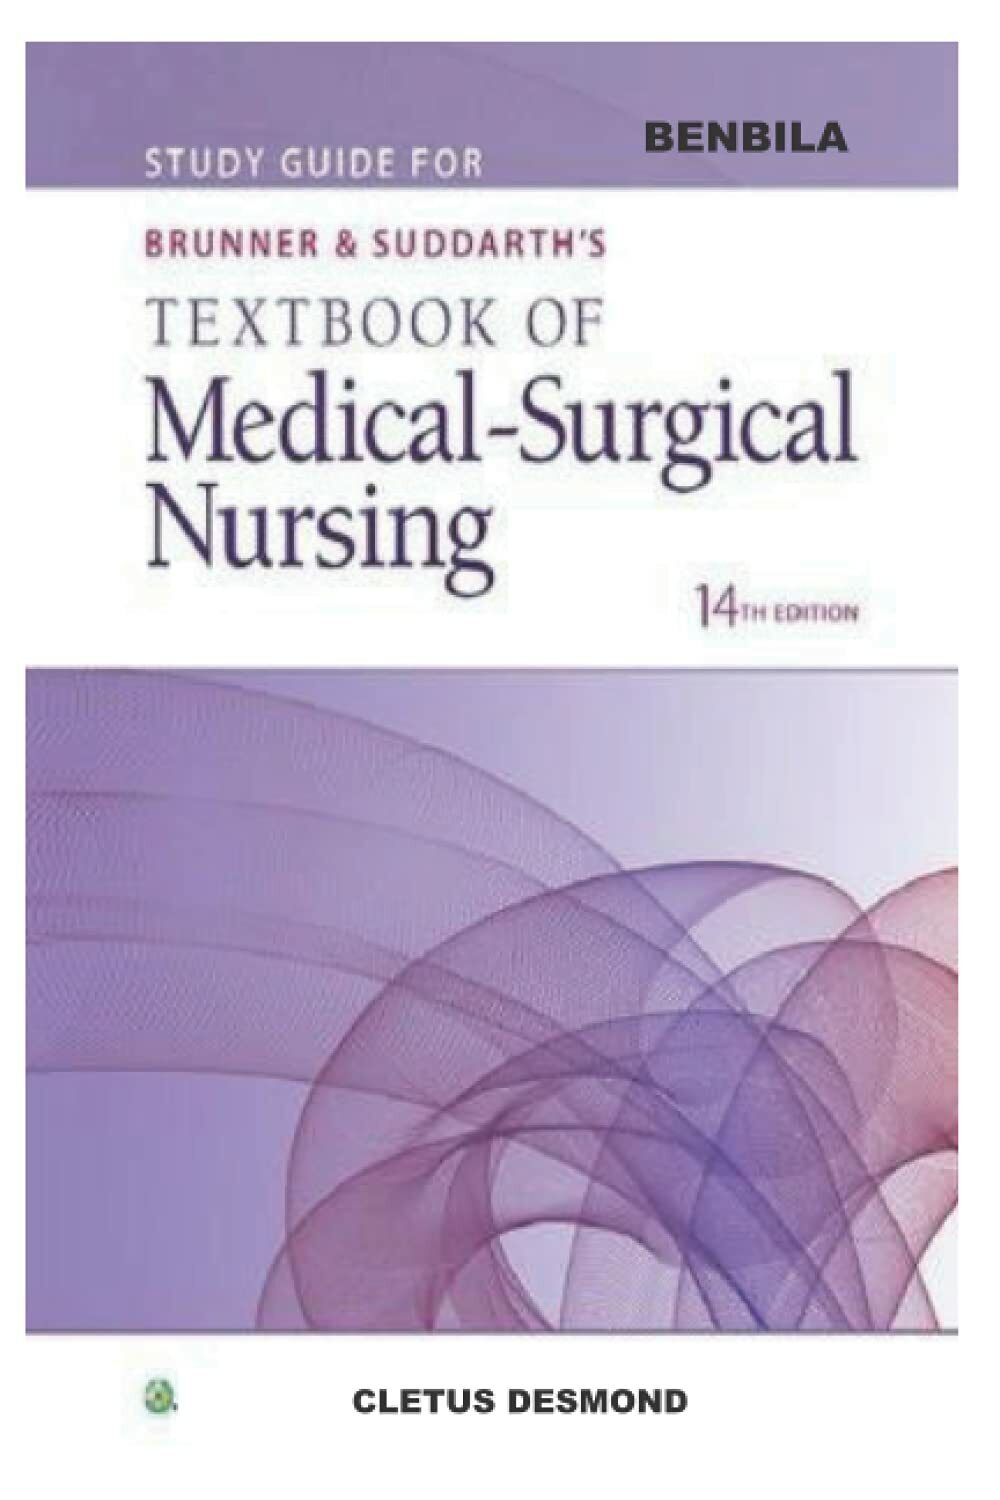 BENBILA: Brunner & Suddarth?s Textbook of Medical-Surgical Nursing (Brunner and 